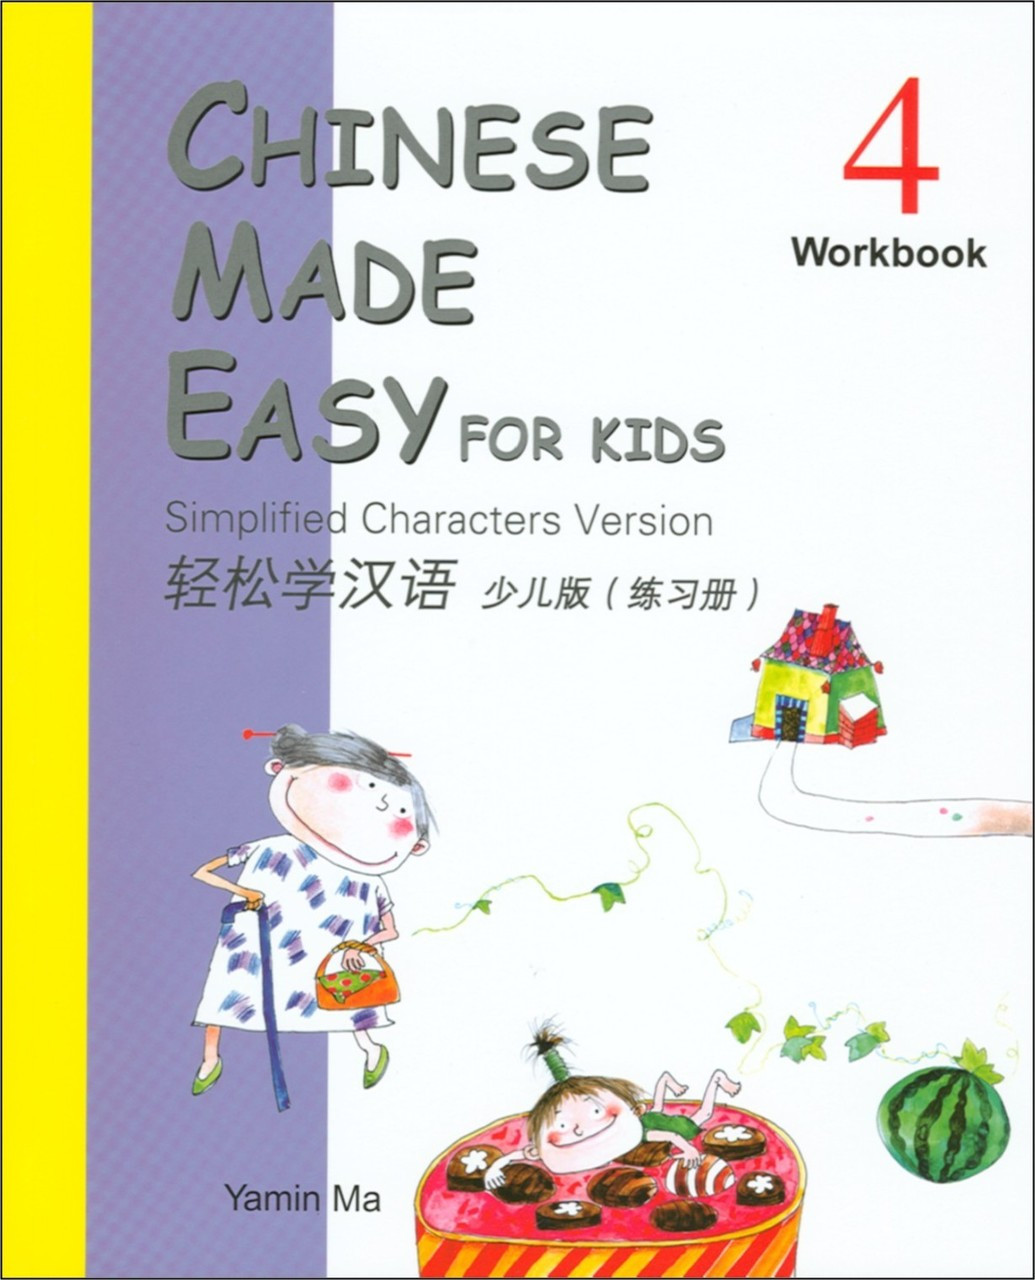 Chinese Made Easy for Kids 4 Workbook Simplified 轻松学汉语少儿版(简体) 练习册4